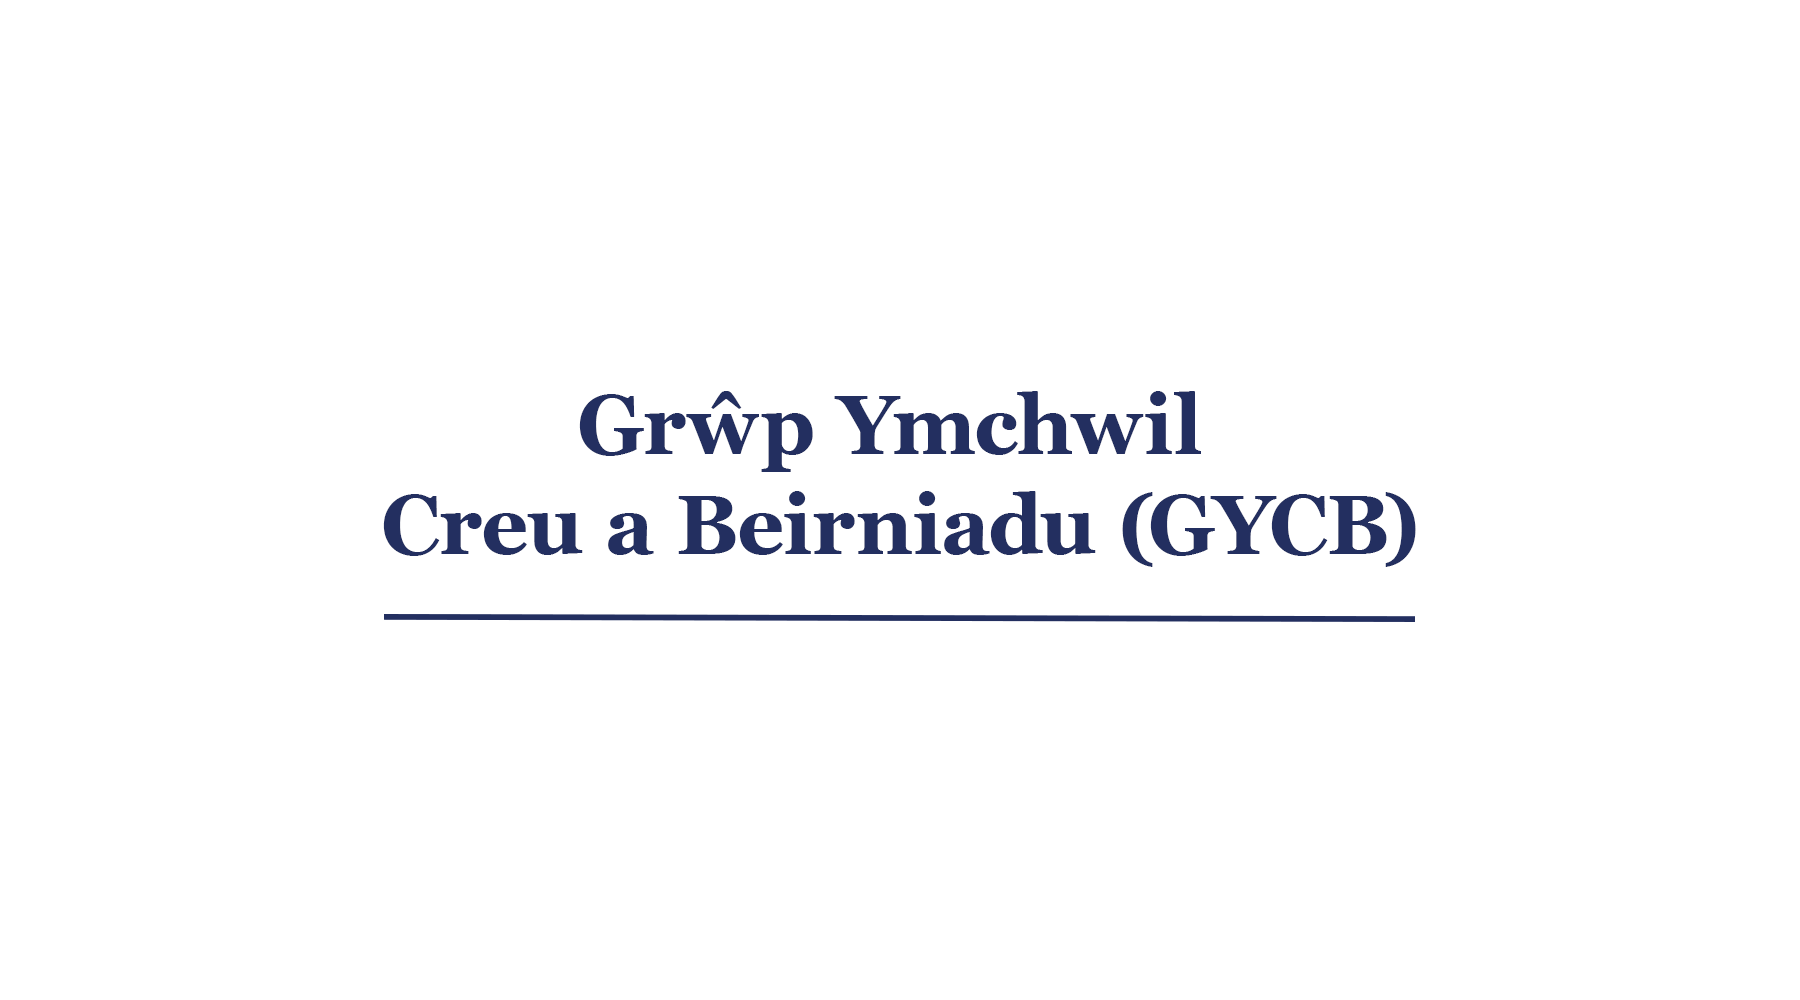 Brand GYCB